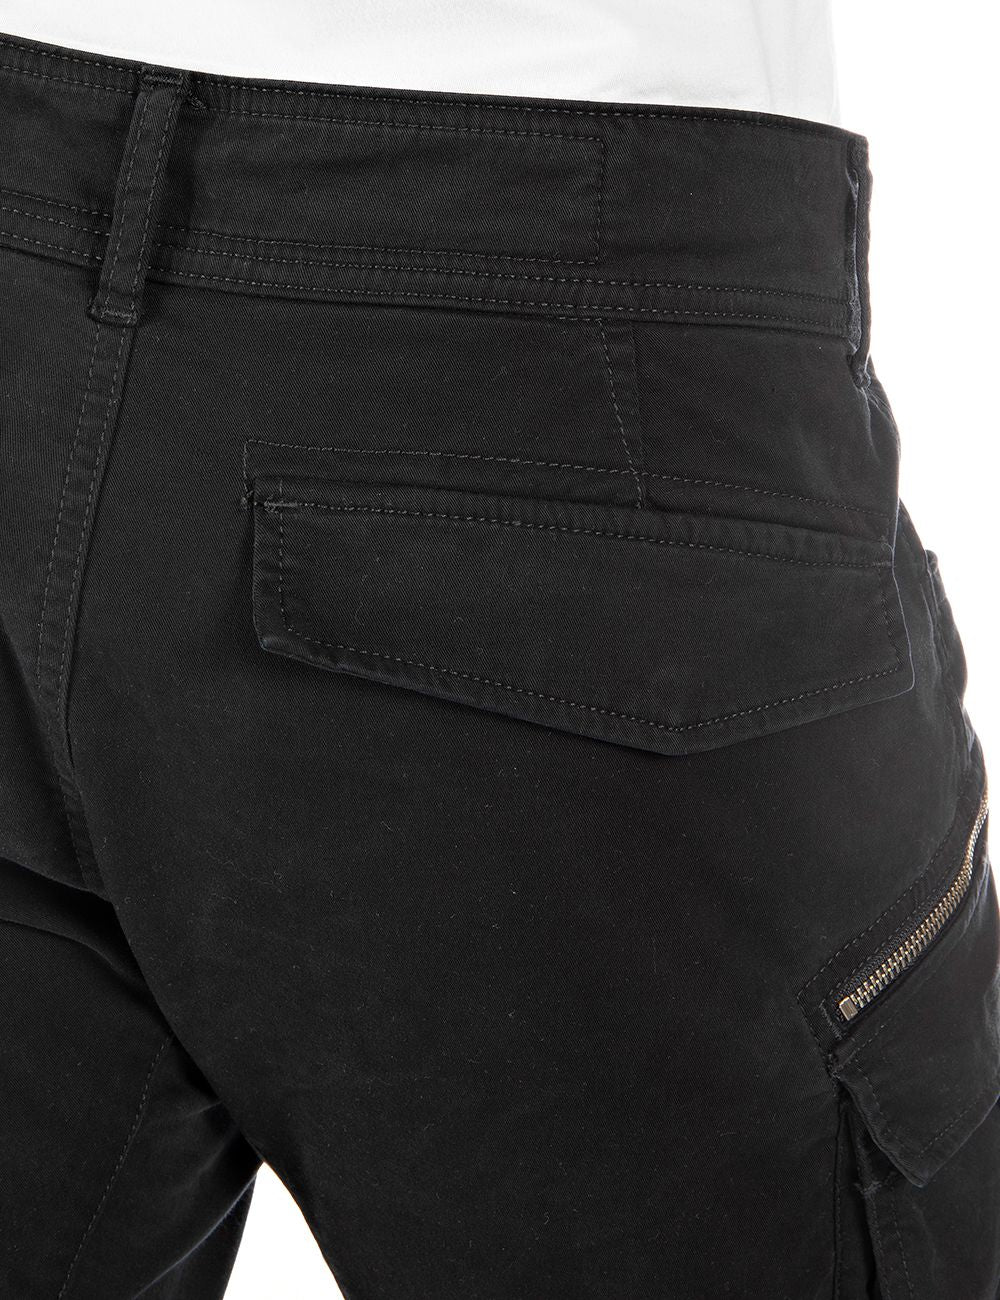 Black Σαράφης – Trousers Joe Replay Cargo